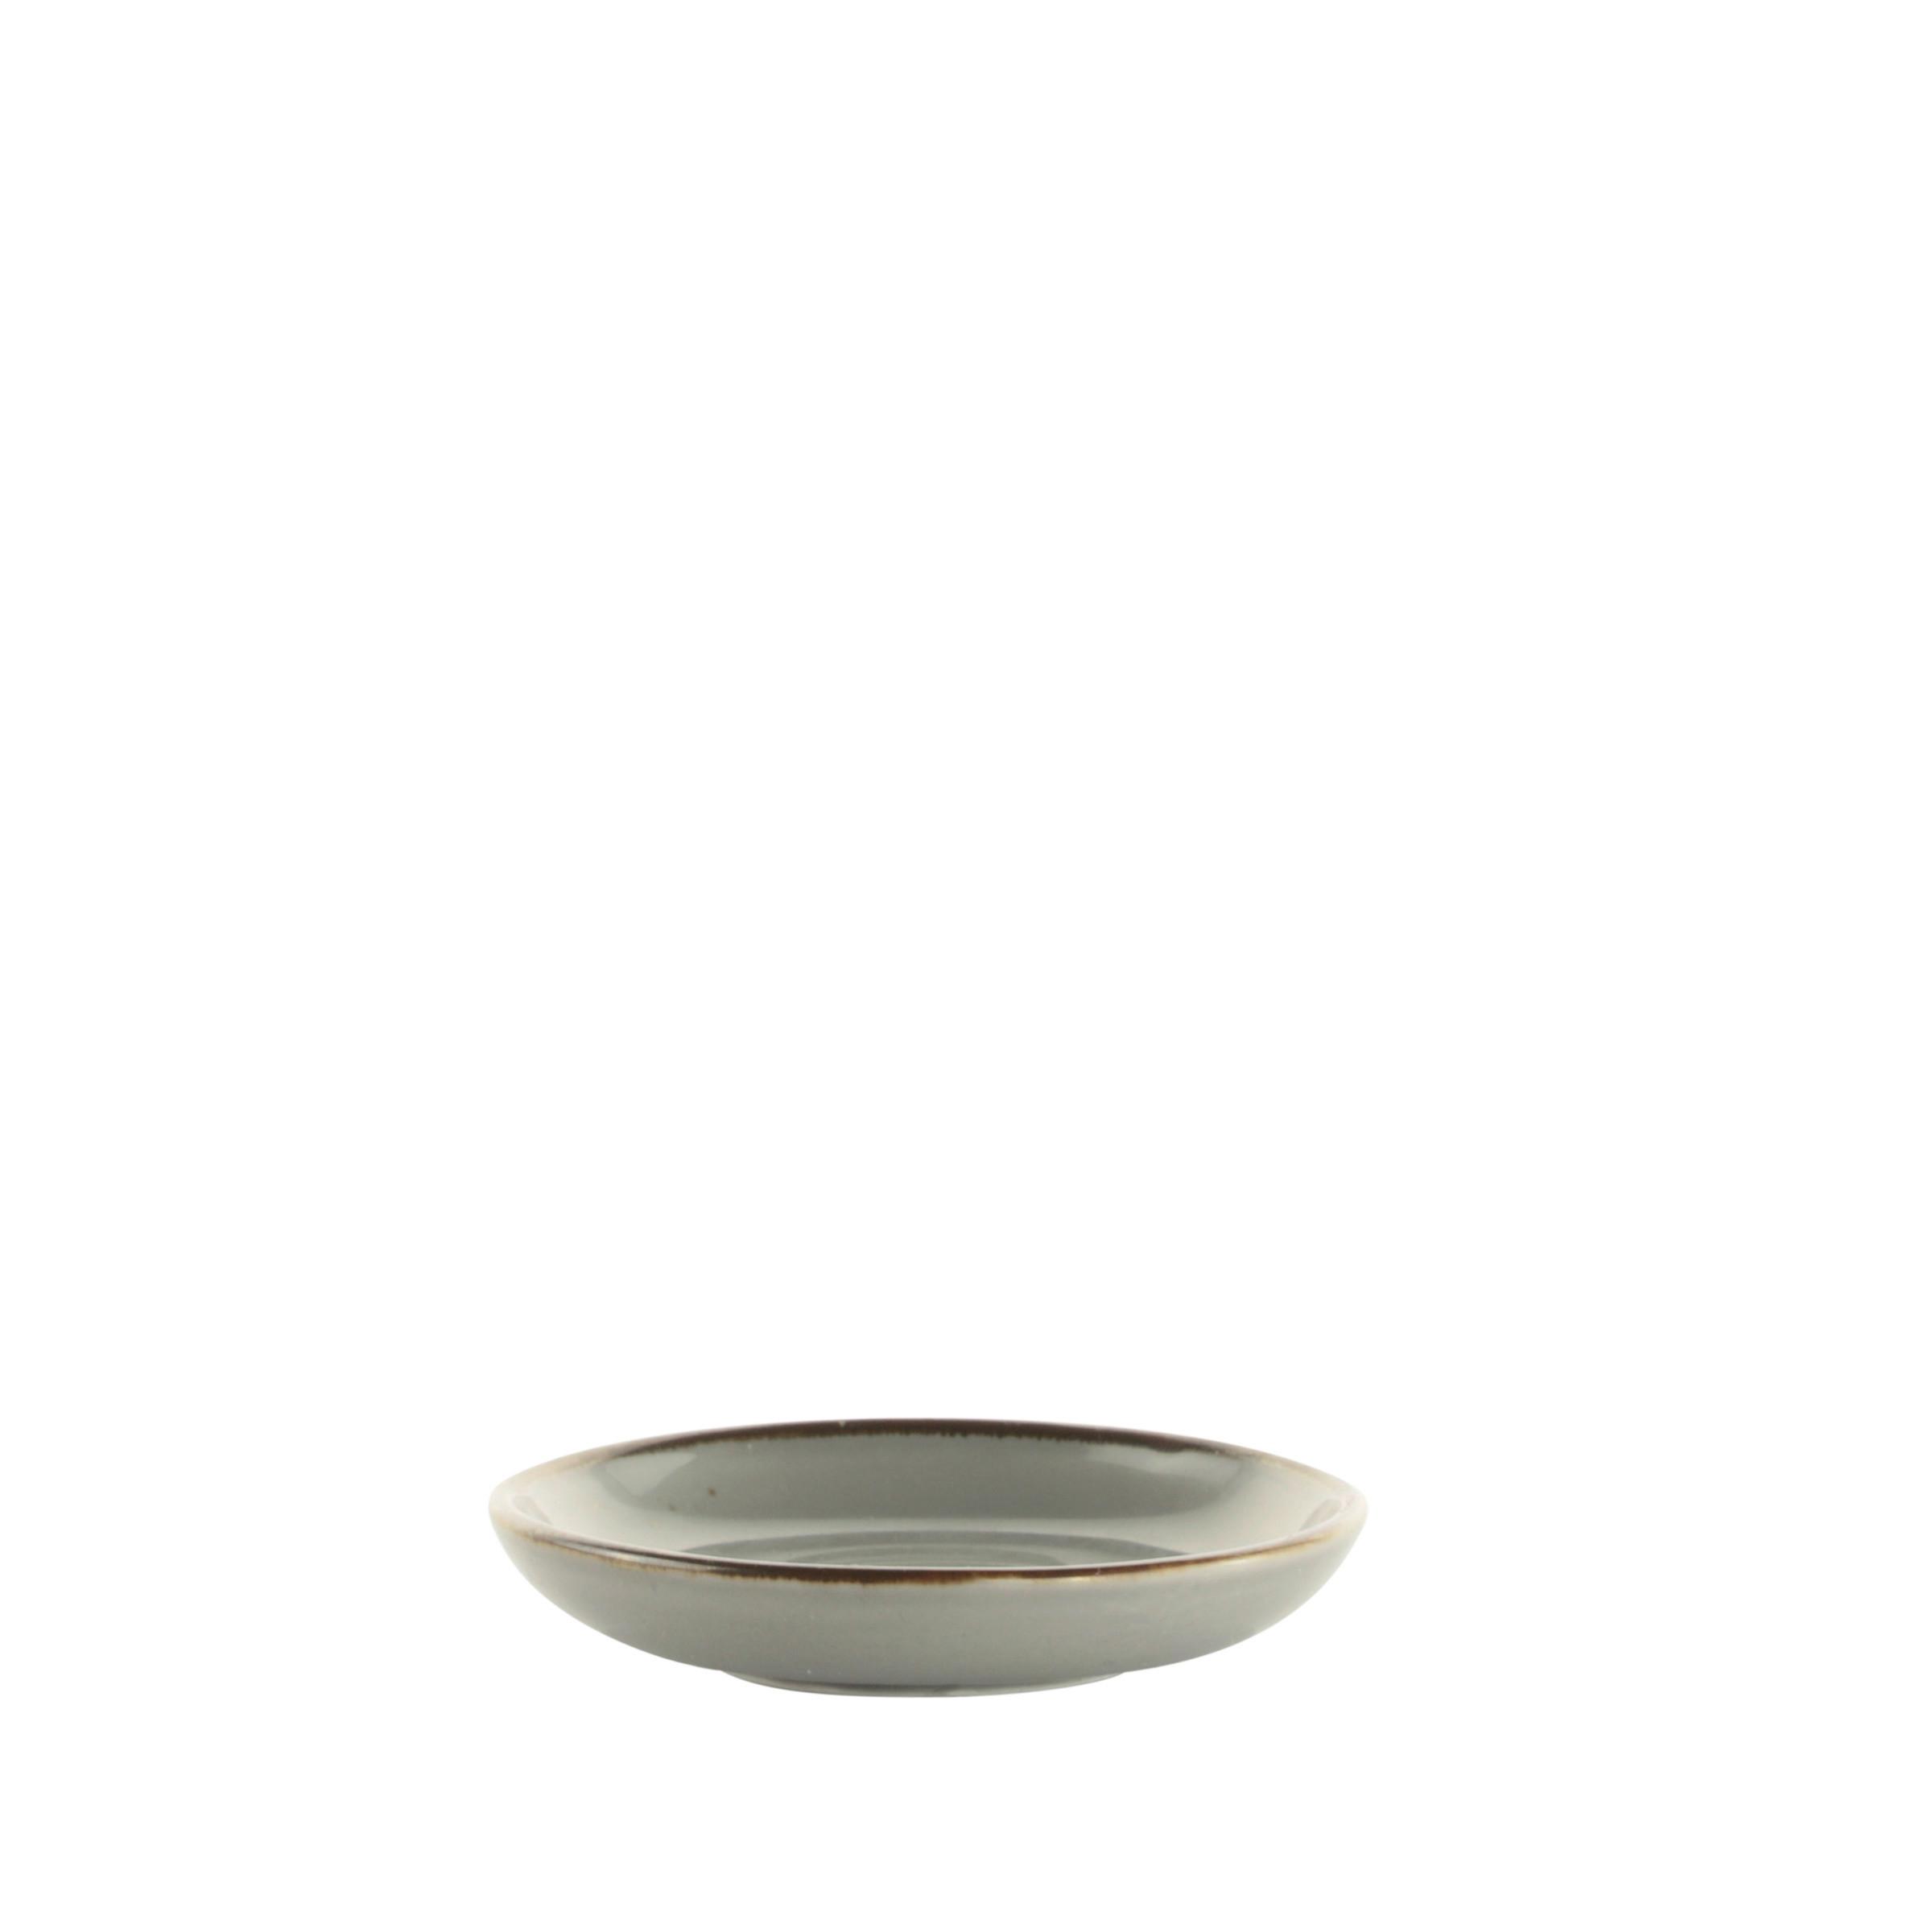 Dipschale Capri aus Porzellan Ø 9,5cm - Grau, Modern, Keramik (9,5/2cm) - Premium Living